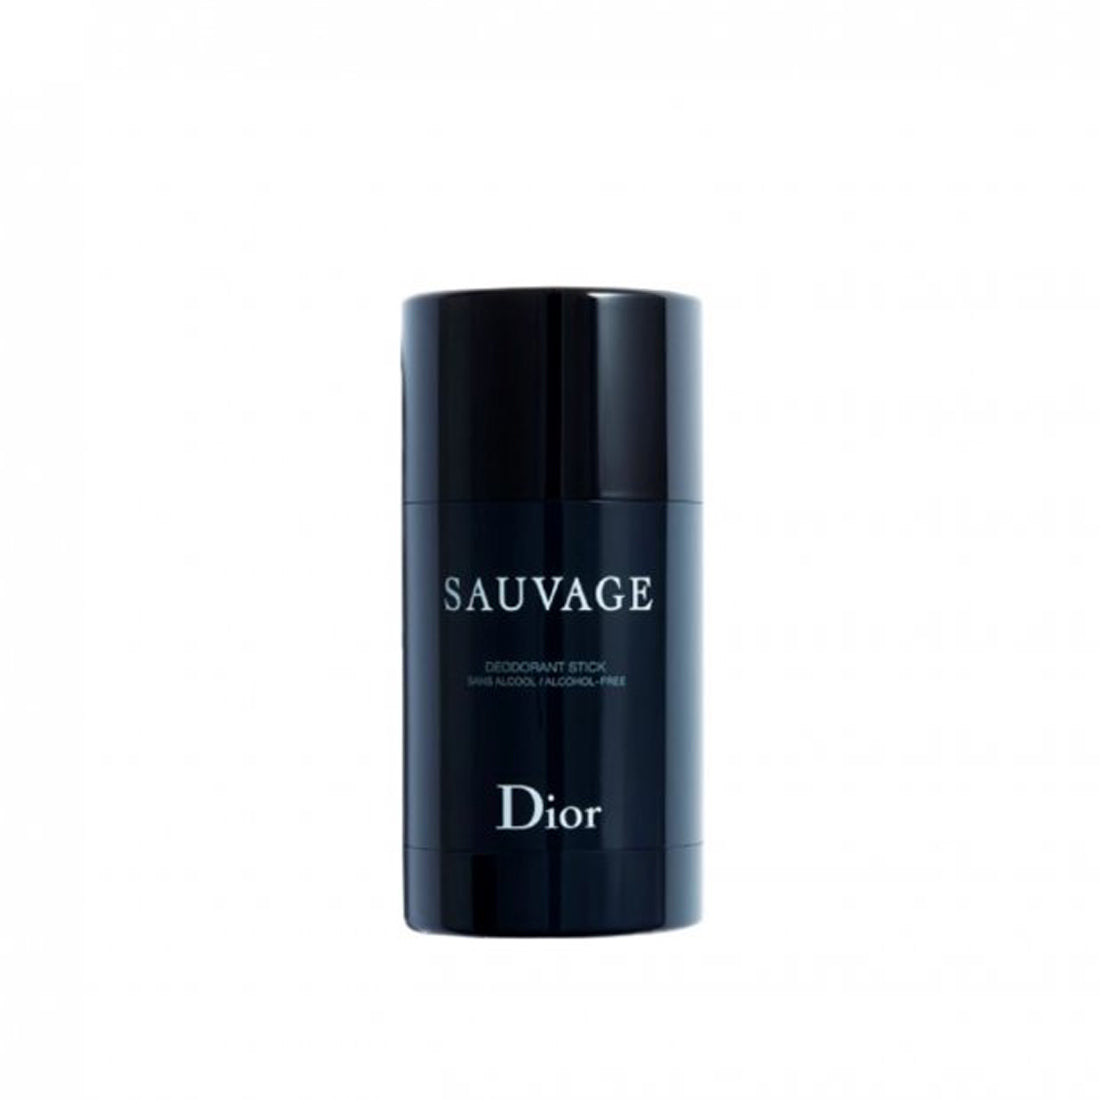 Christian Dior Sauvage Deodorant stick For Men - 75ml